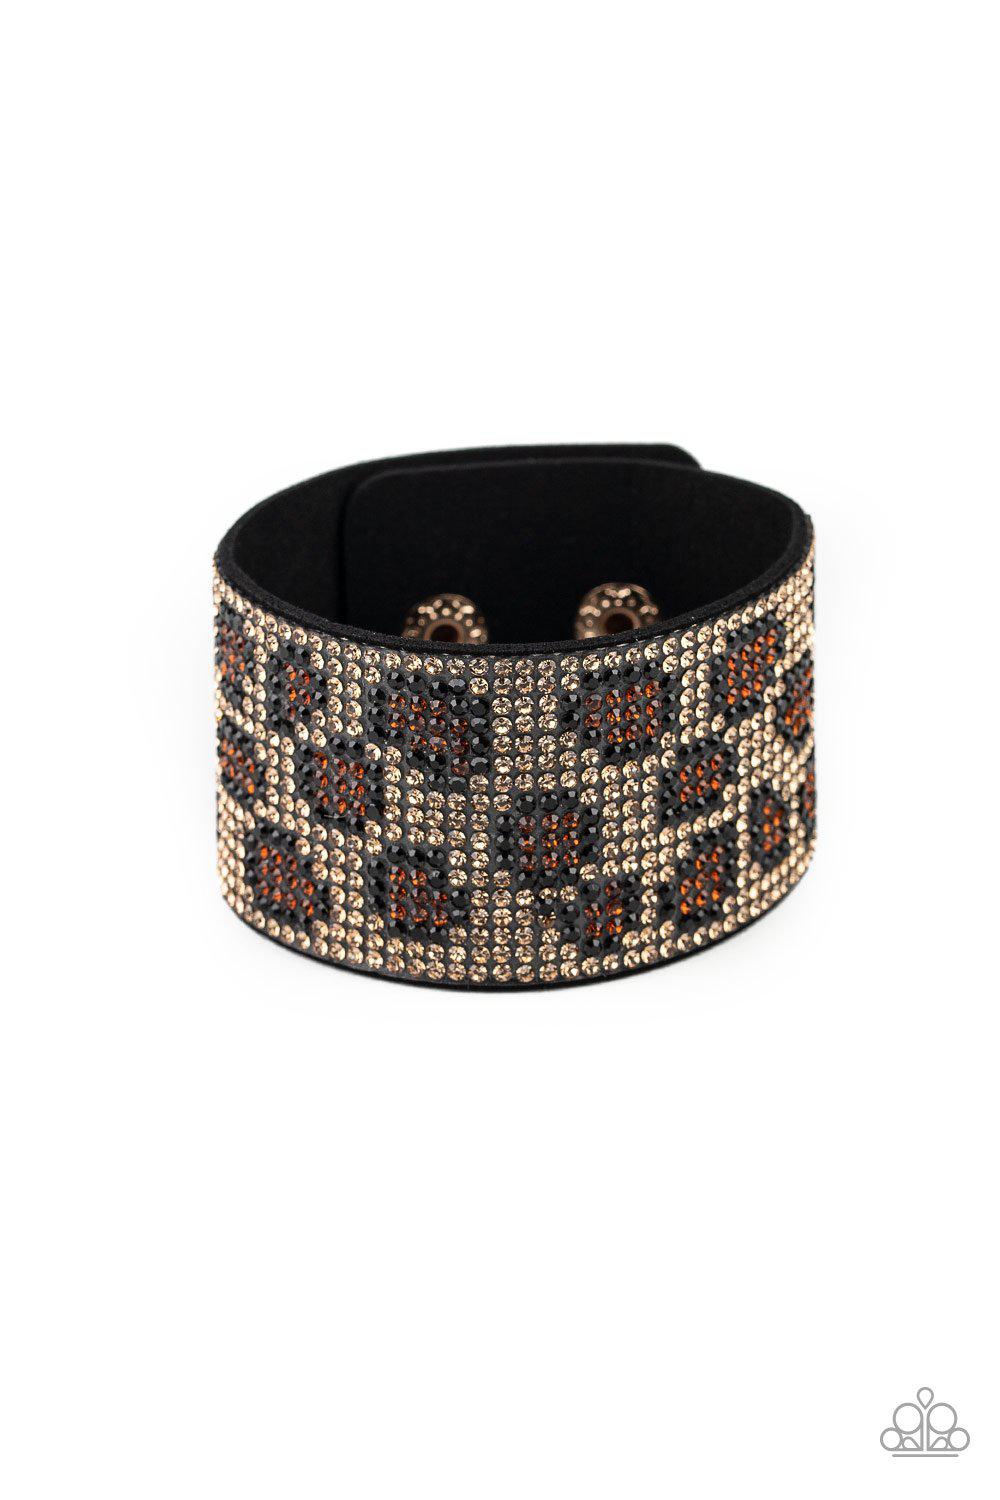 Cheetah Couture Brown Animal Print Rhinestone Wrap Snap Bracelet - Paparazzi Accessories-CarasShop.com - $5 Jewelry by Cara Jewels